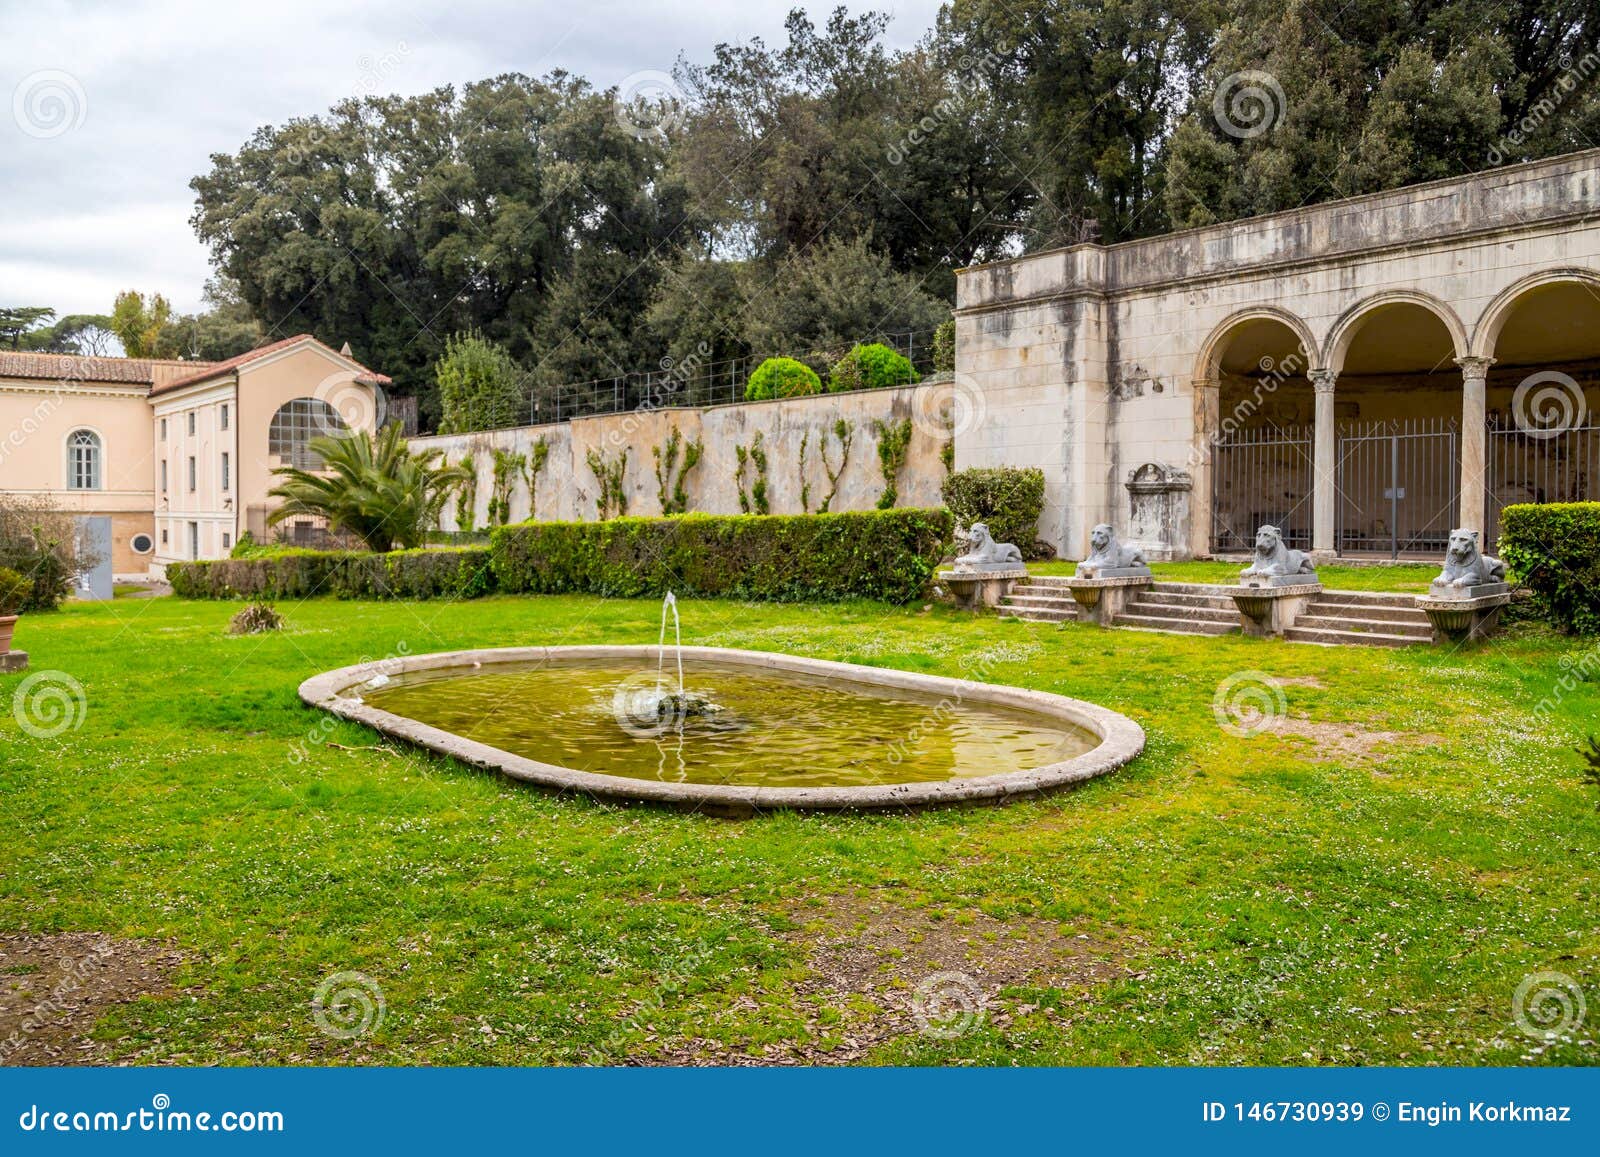 Villa Borghese Gardens In Rome Stock Image - Image of ...